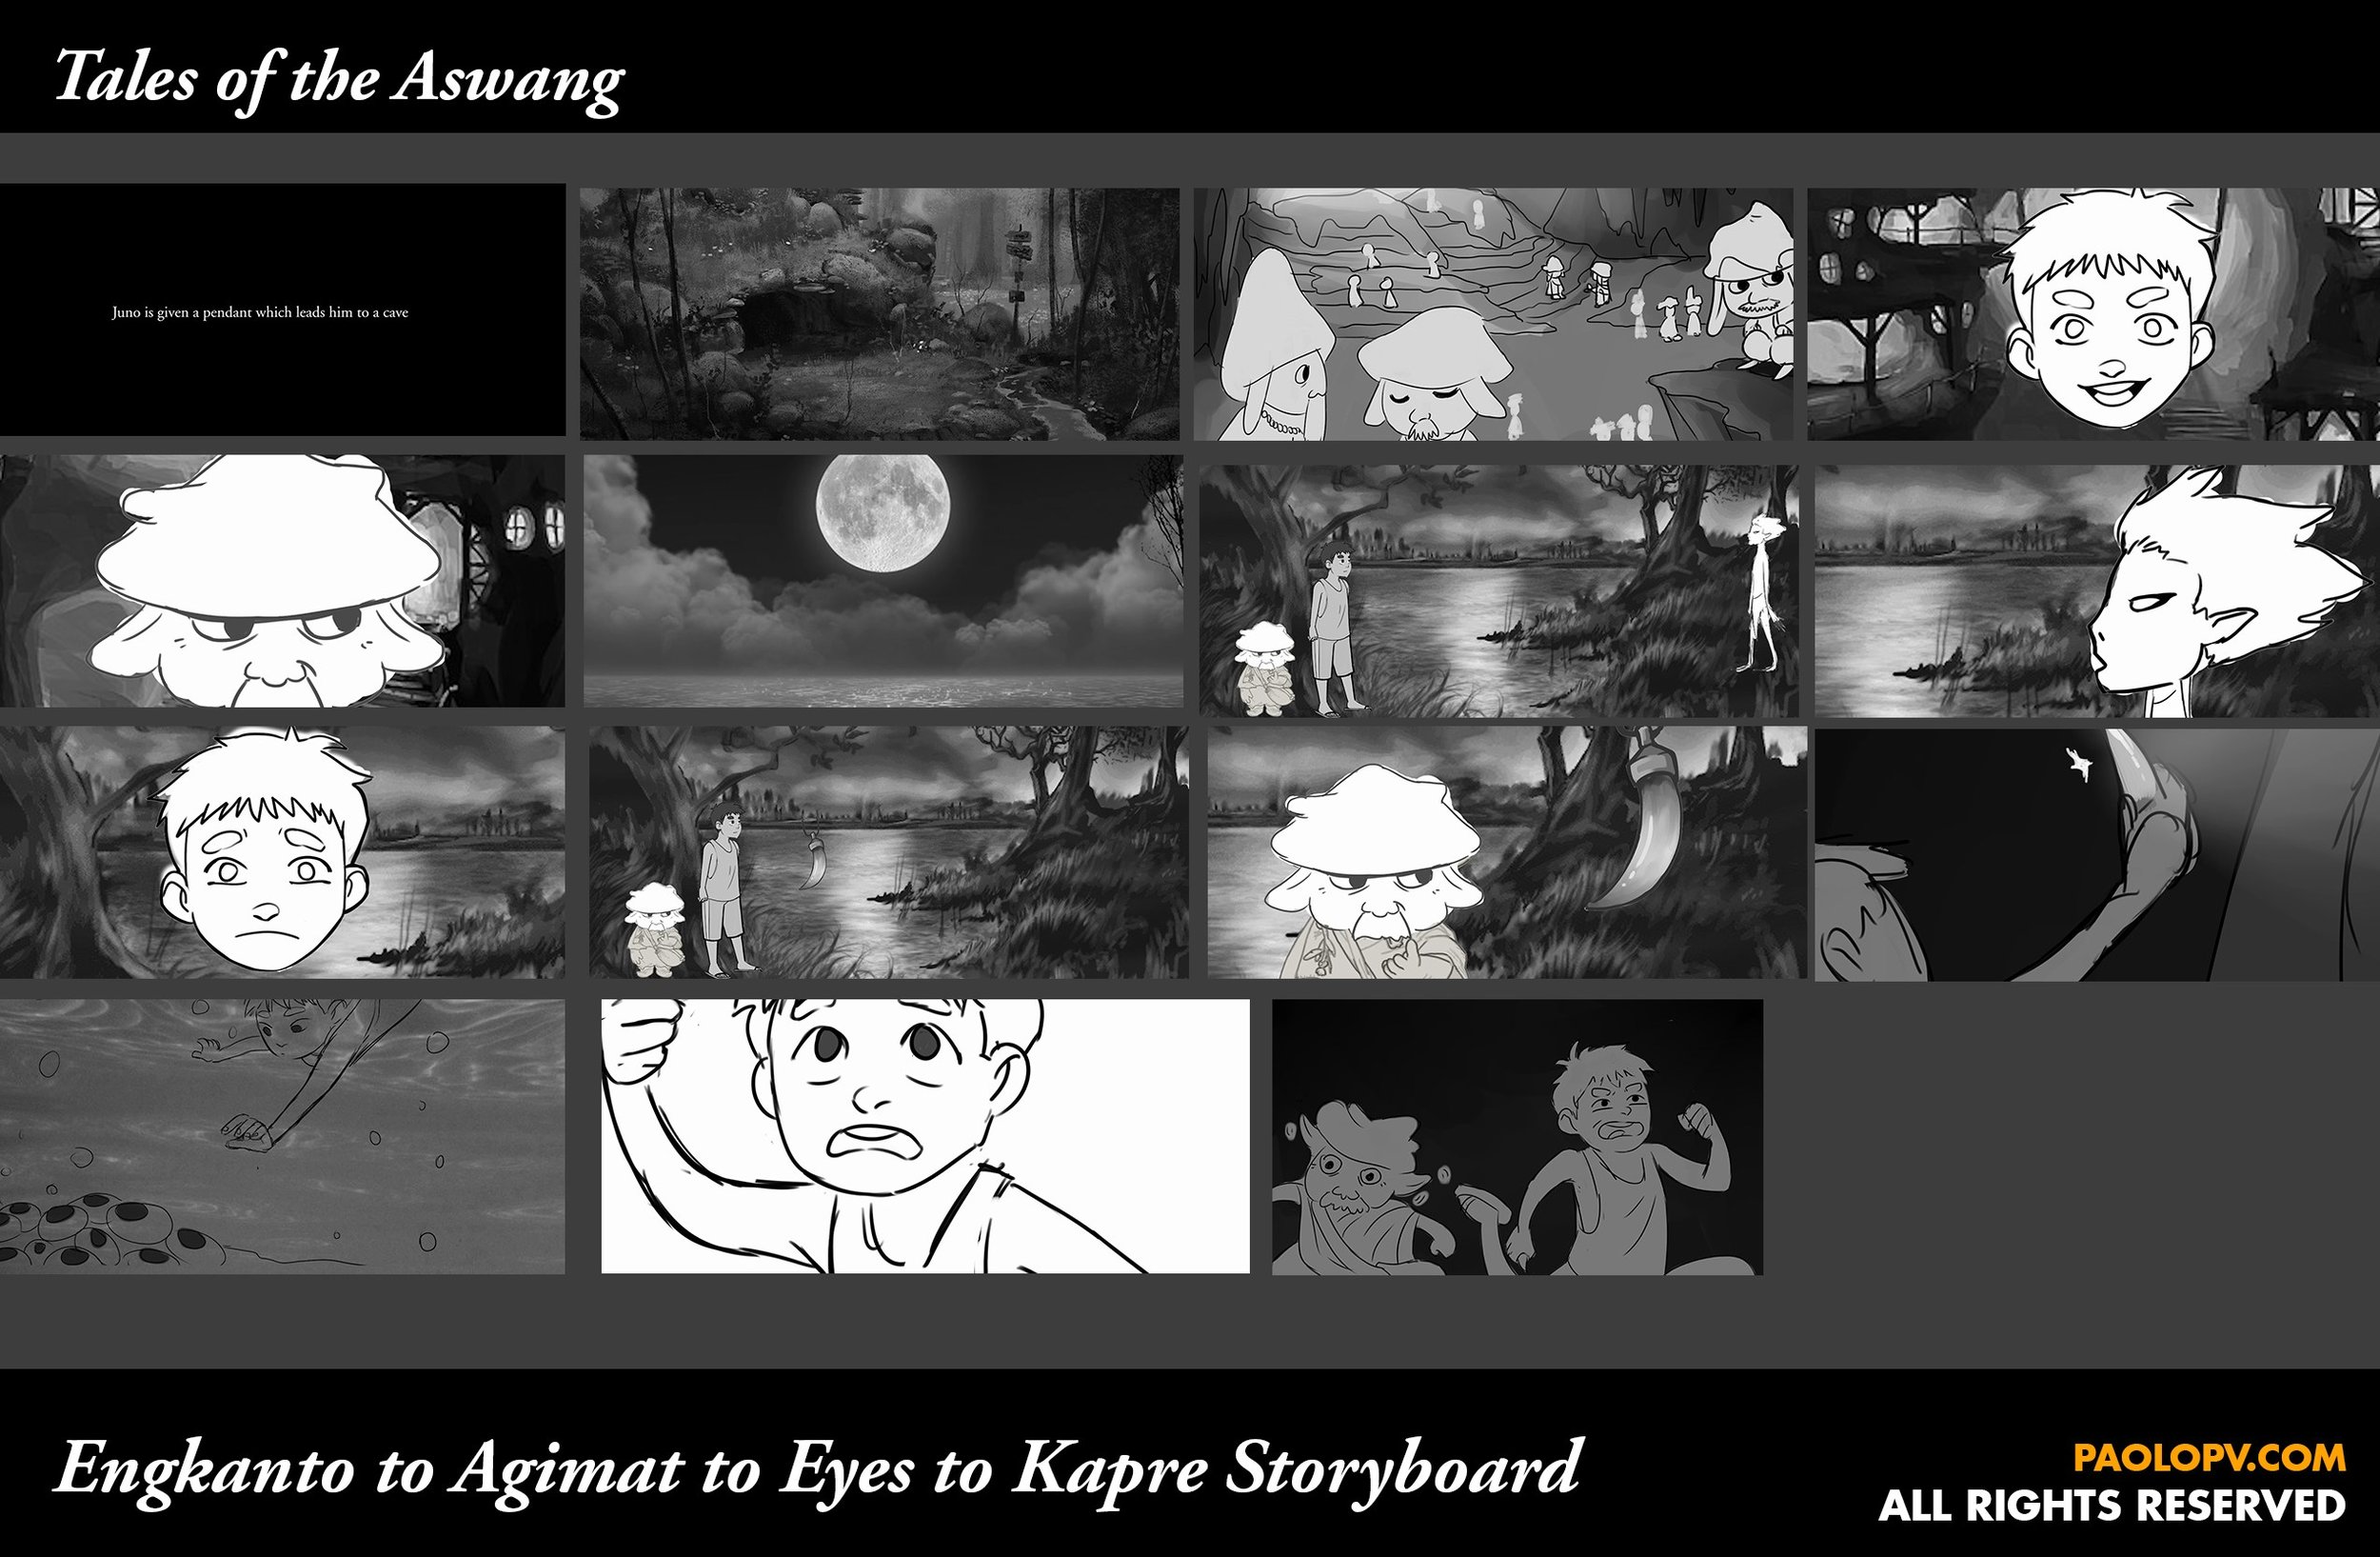 Engkanto-to-Agimat-to-Eyes-to-Kapre-Storyboard.jpg